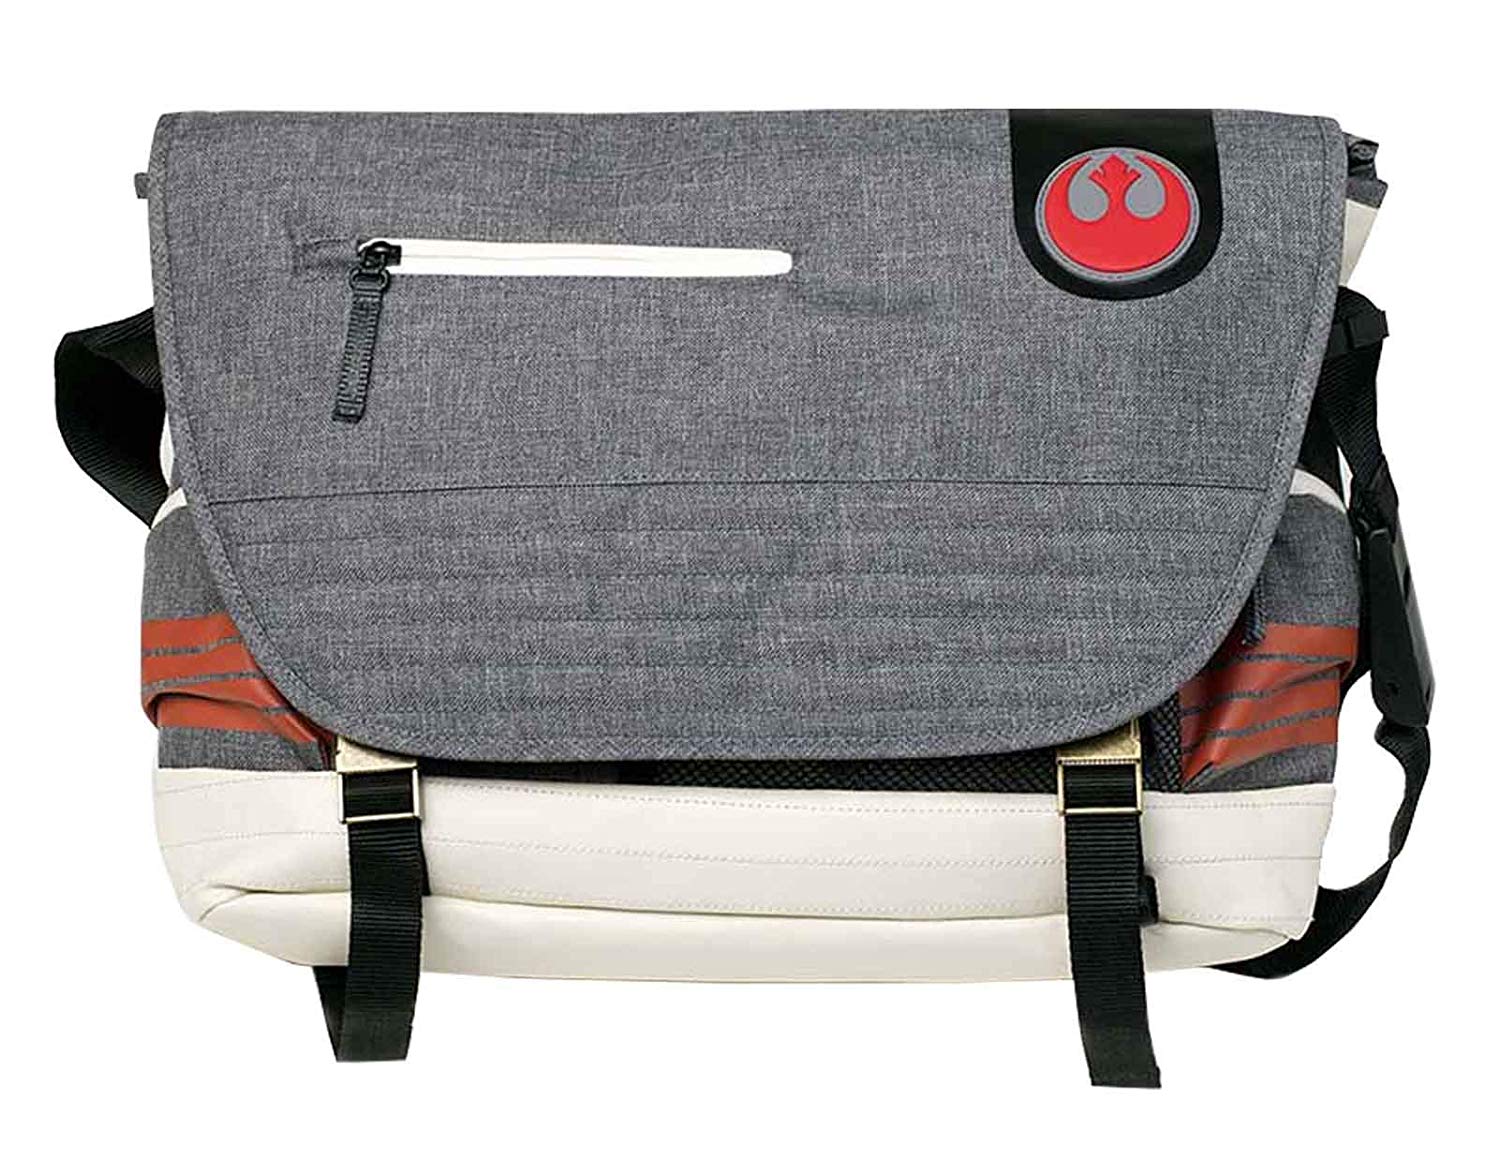 Star Wars Rebel Pilot Messenger Bag on Amazon